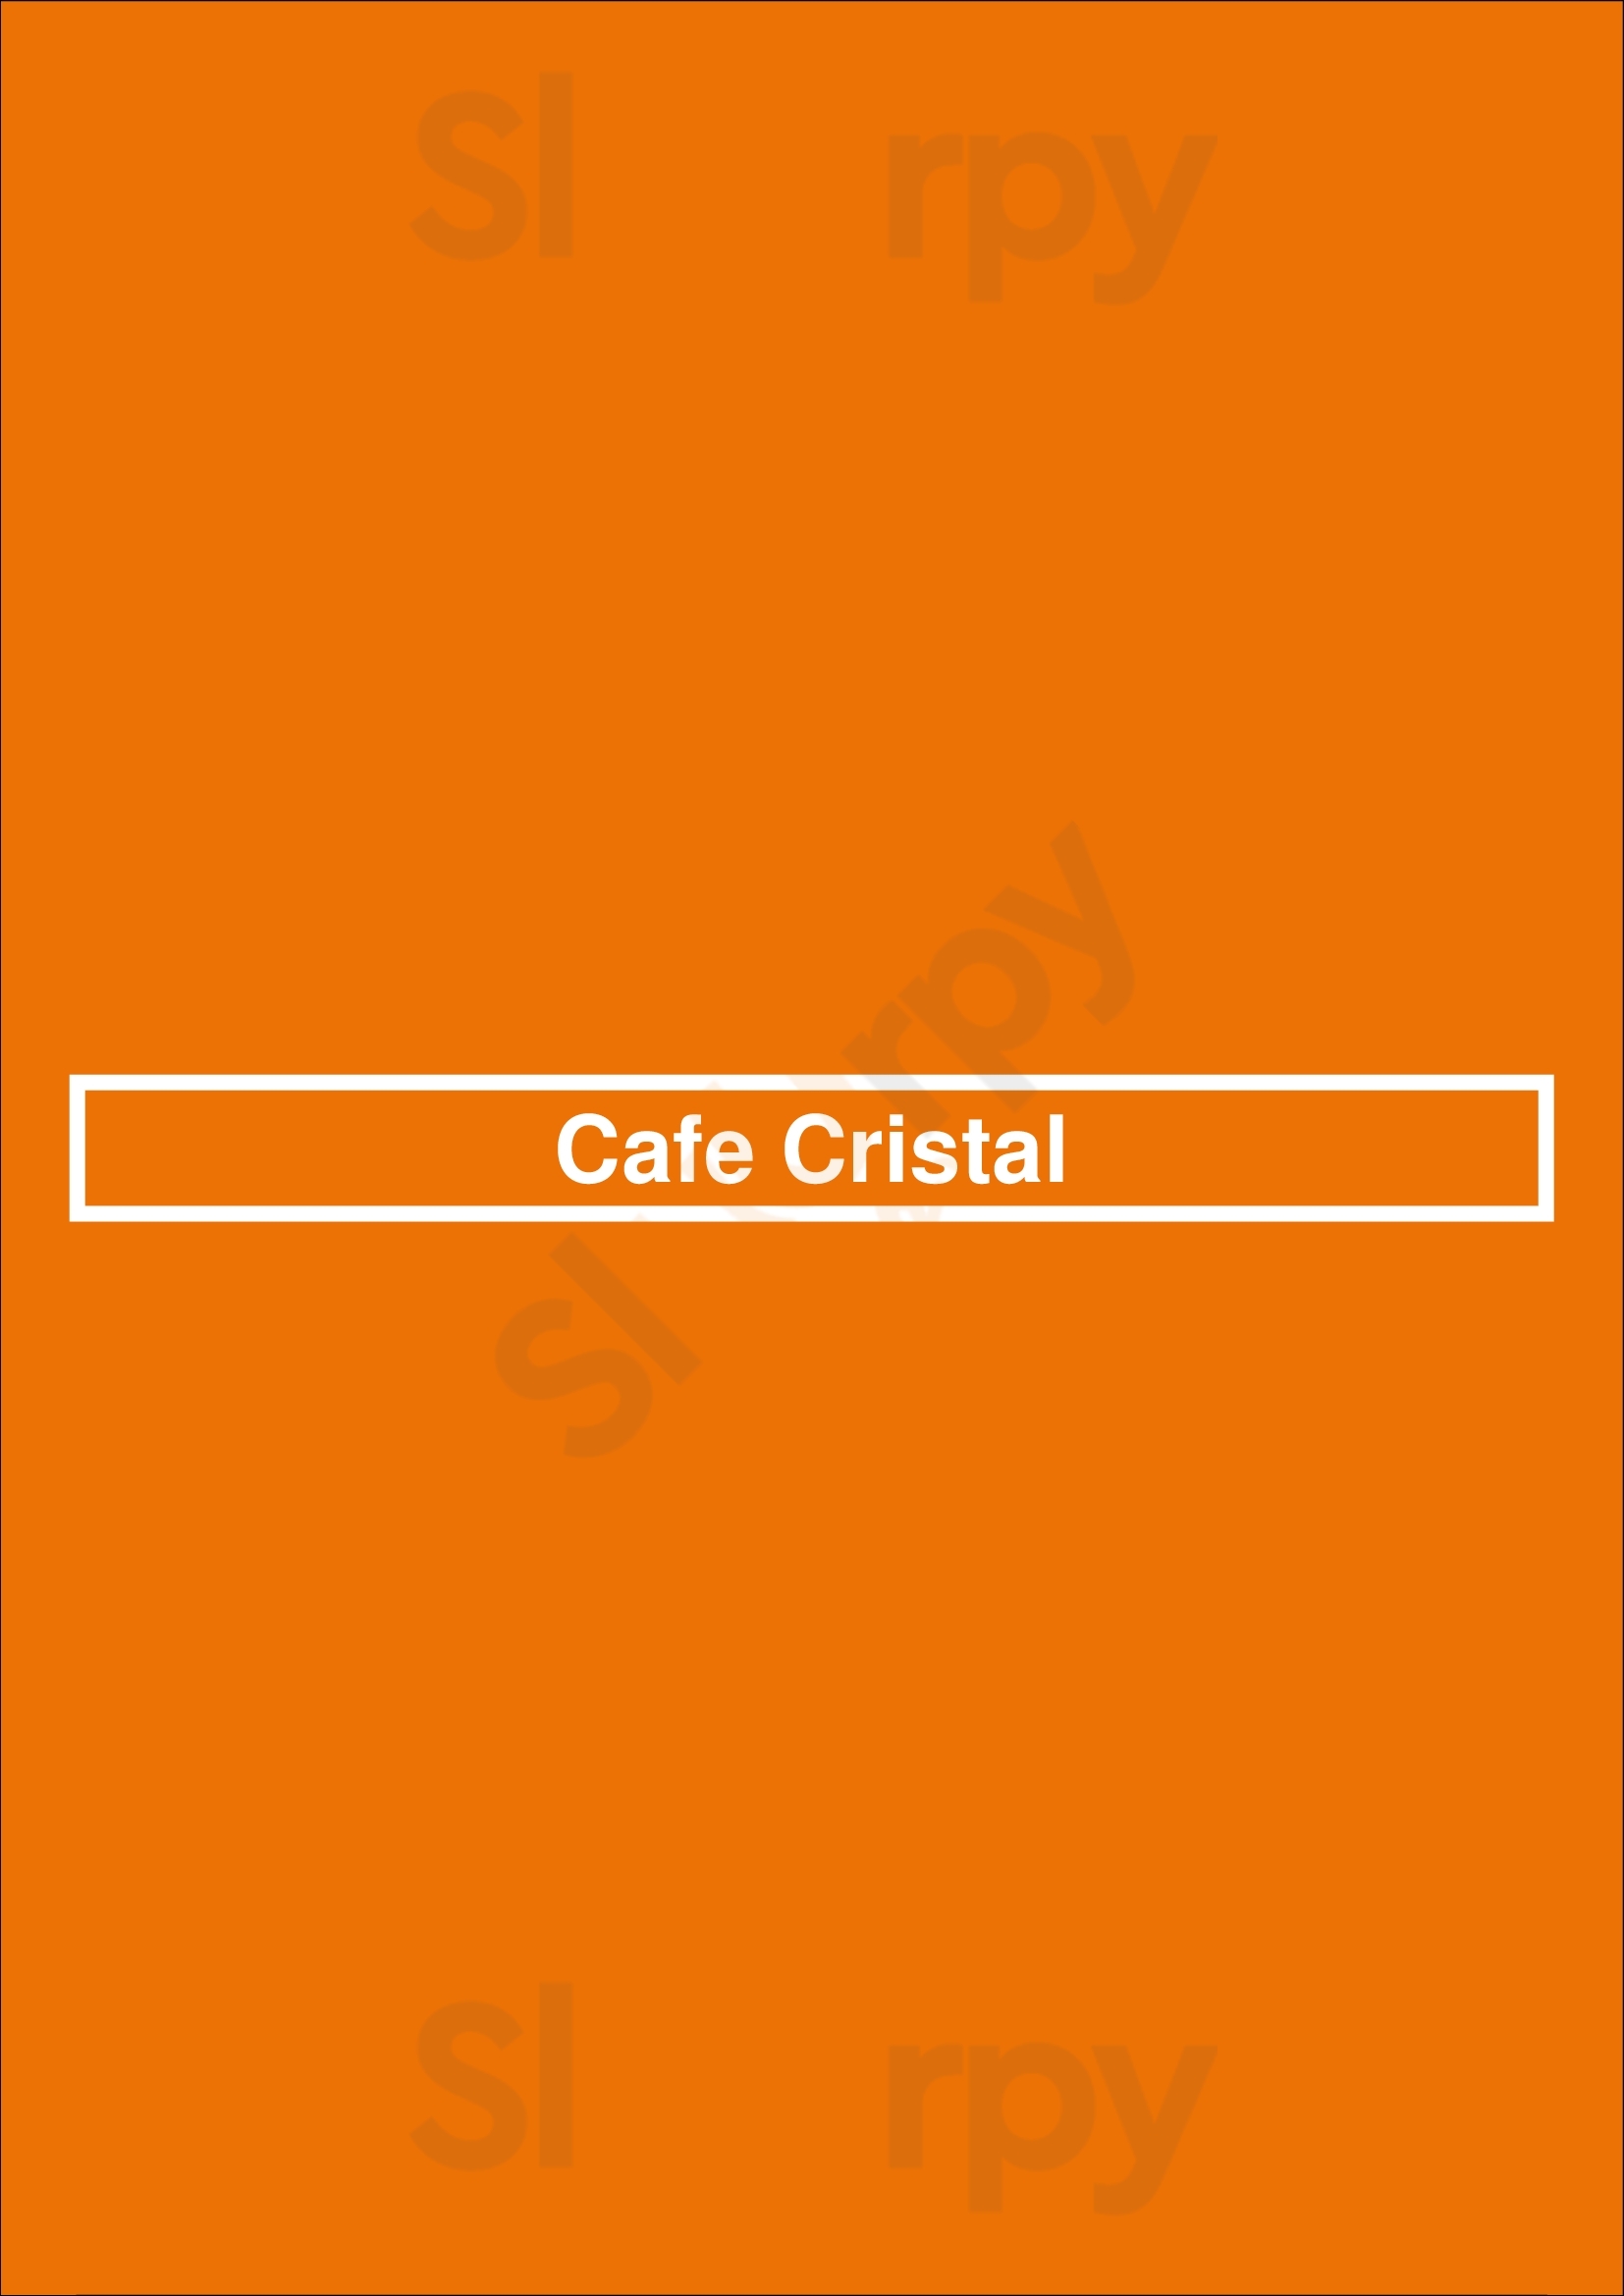 Cafe Cristal Ottawa Menu - 1